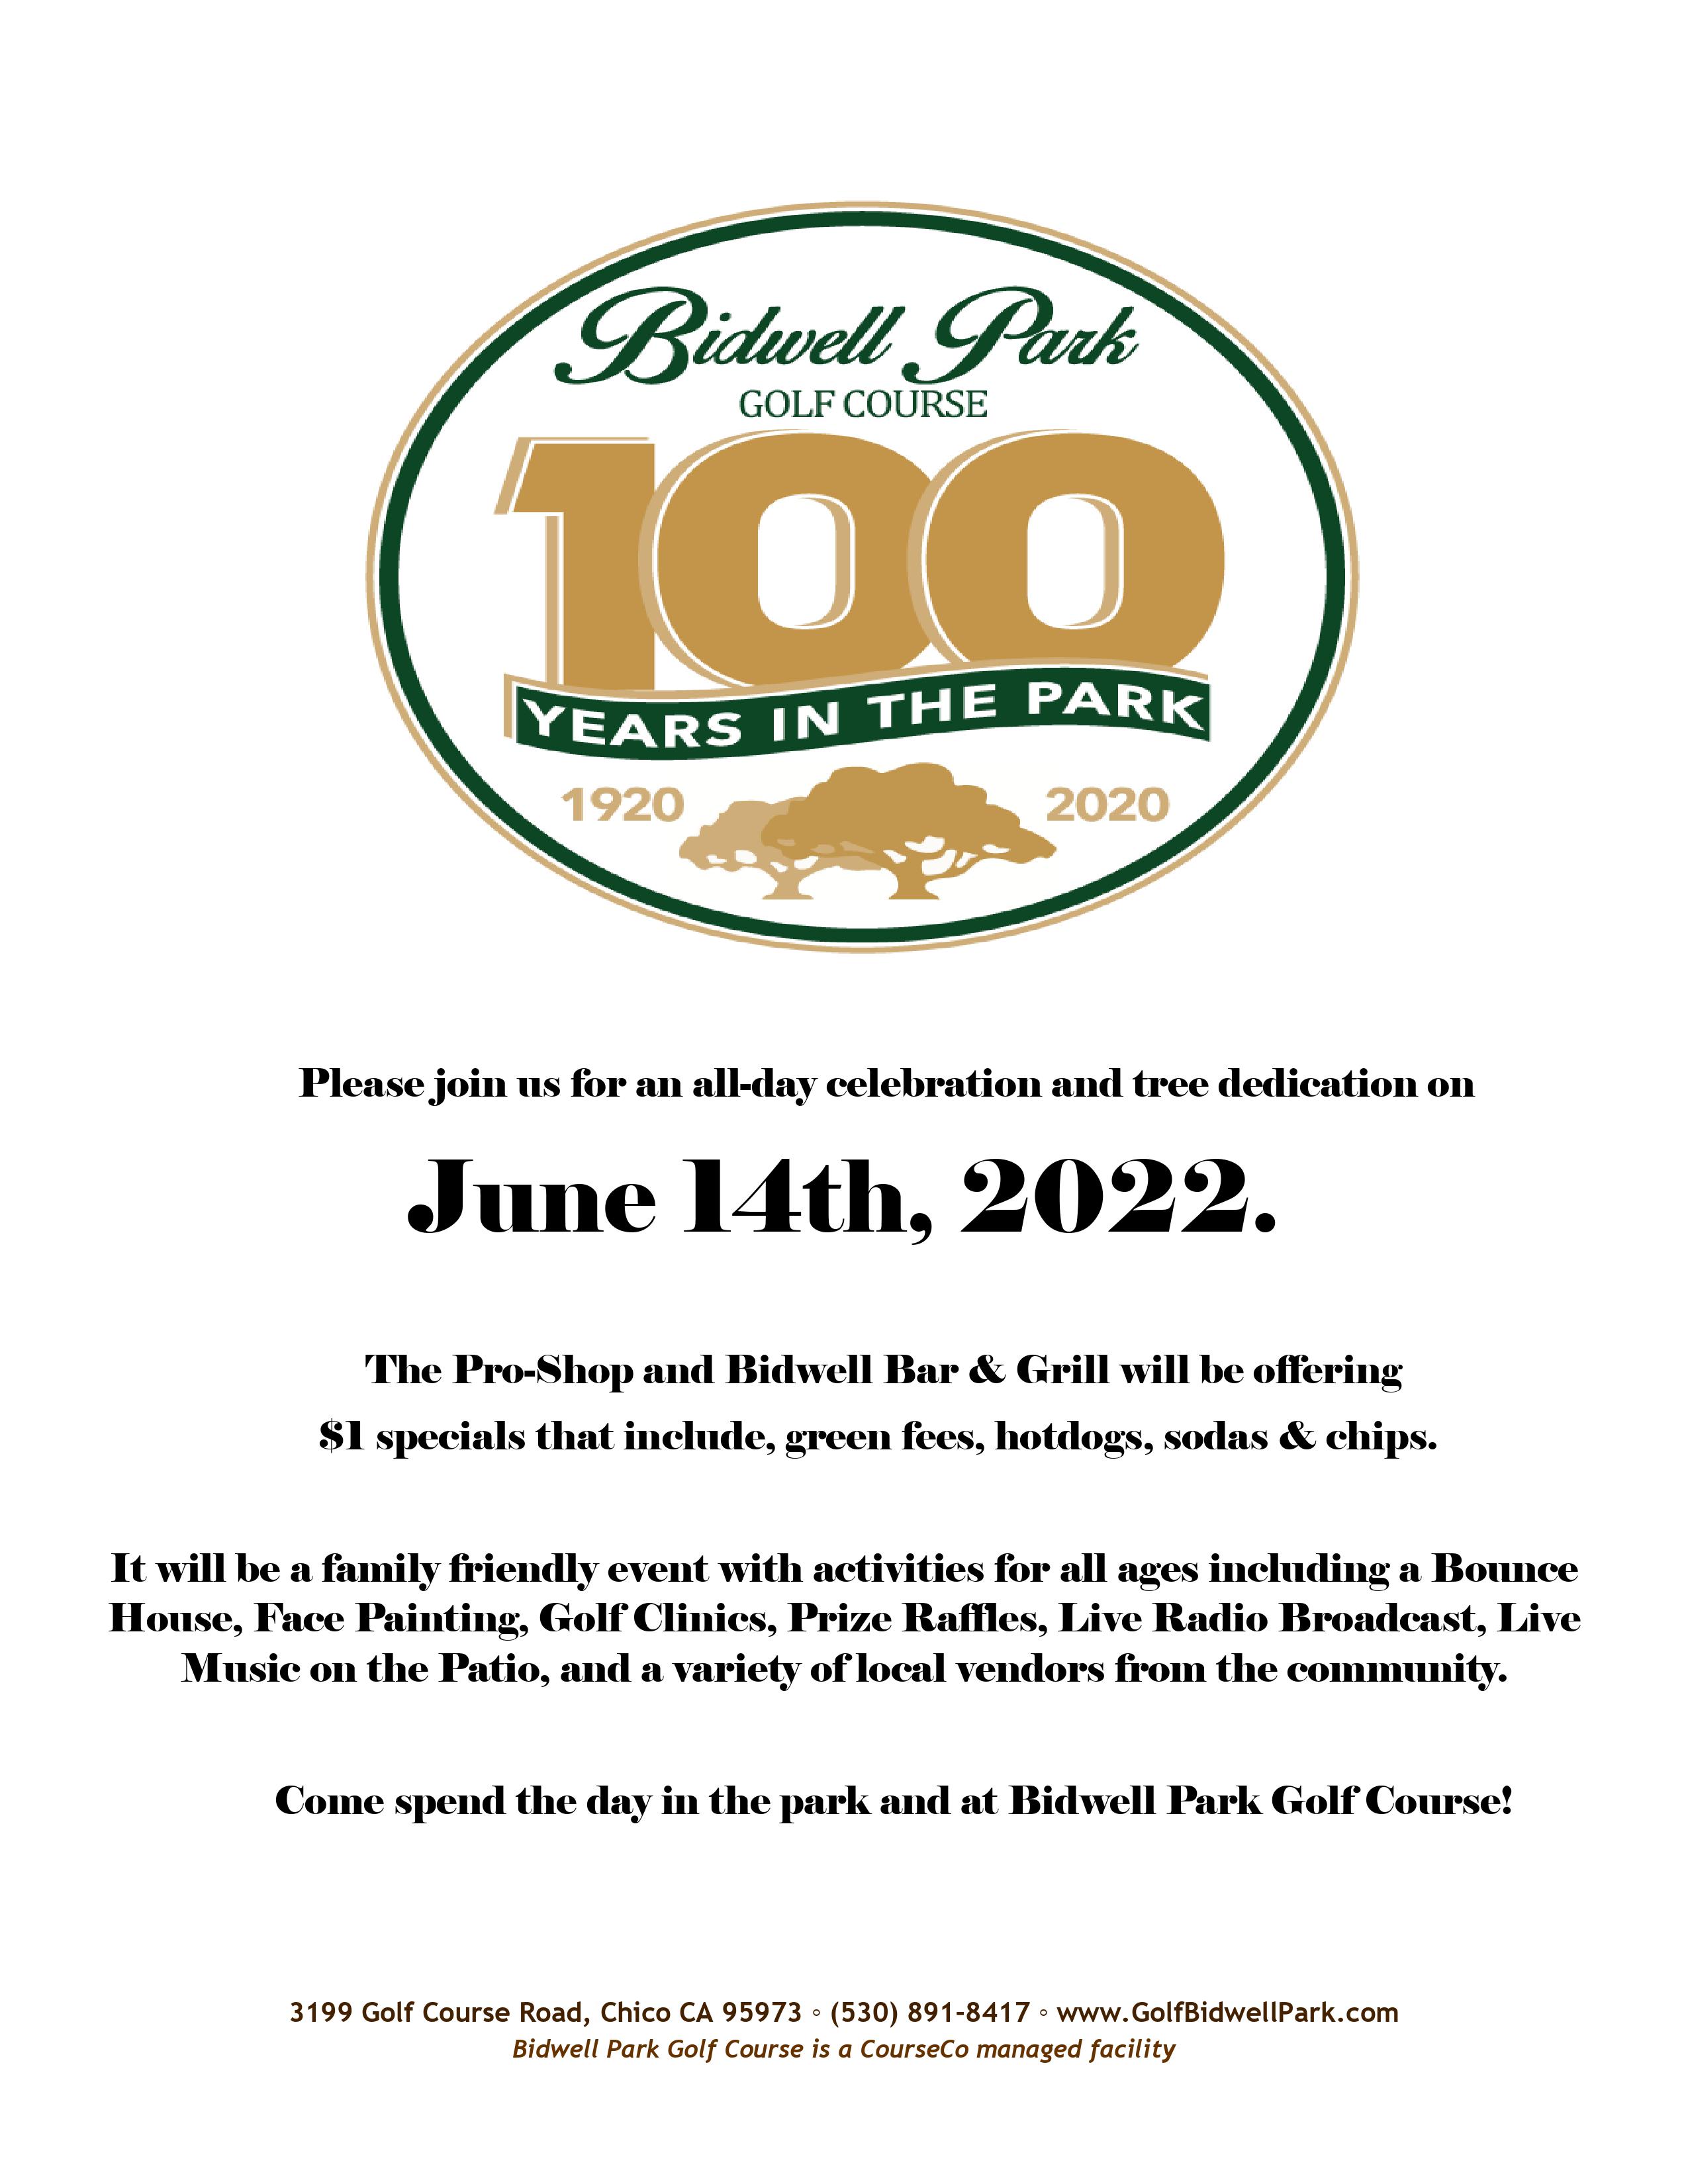 Bidwell 100 year invite